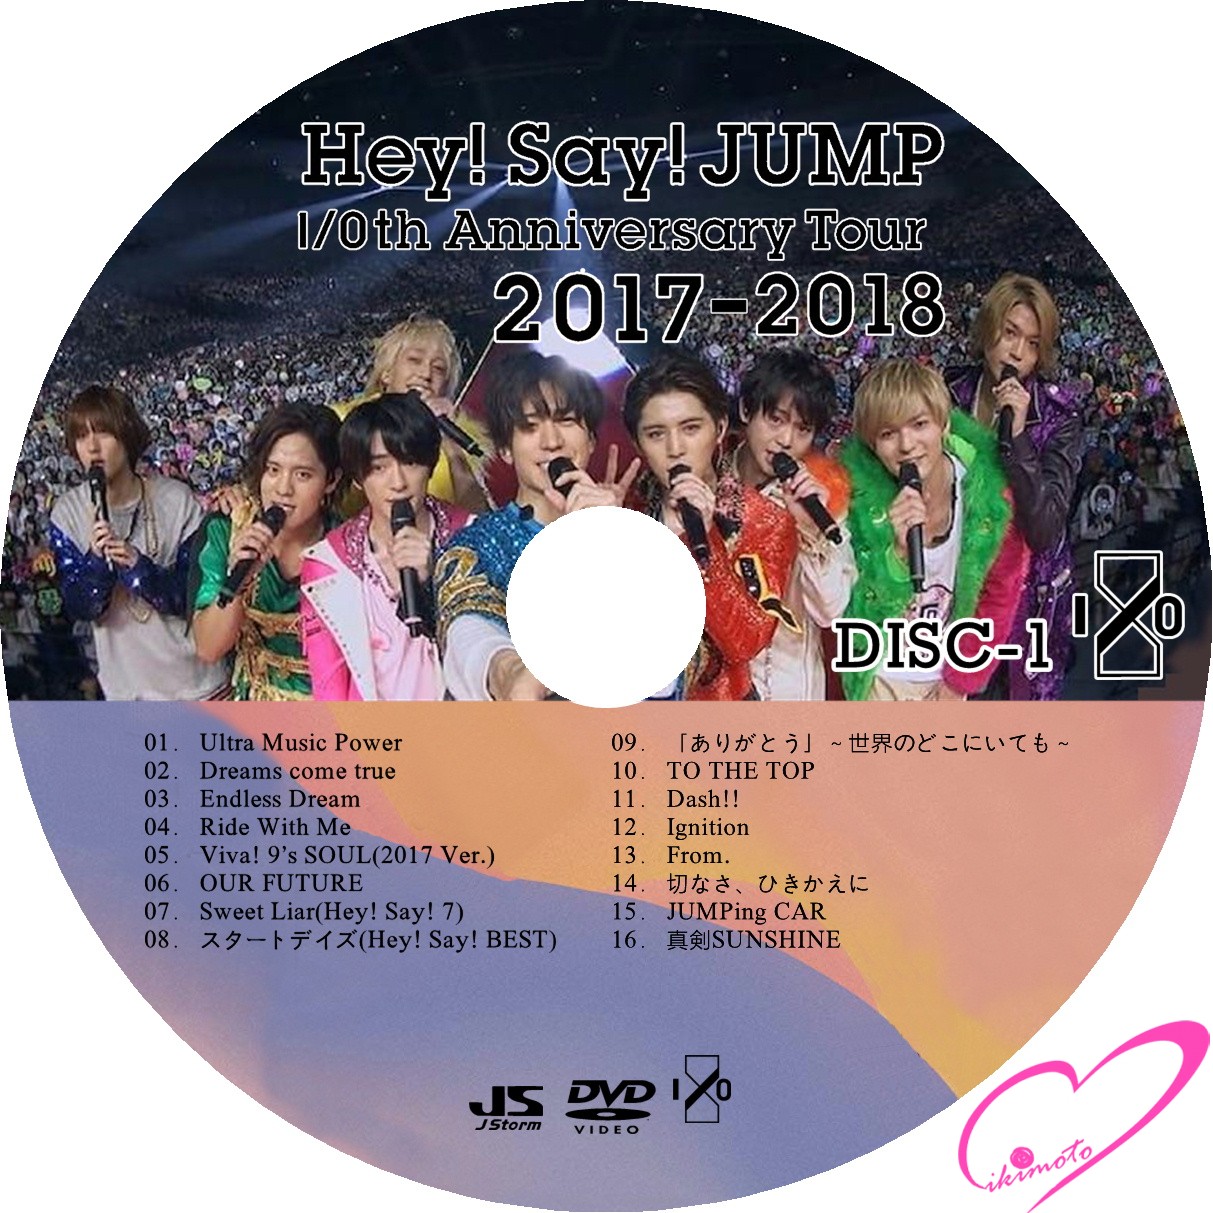 Hey! Say! JUMP Ｉ／OthAnniversary Tour DVD